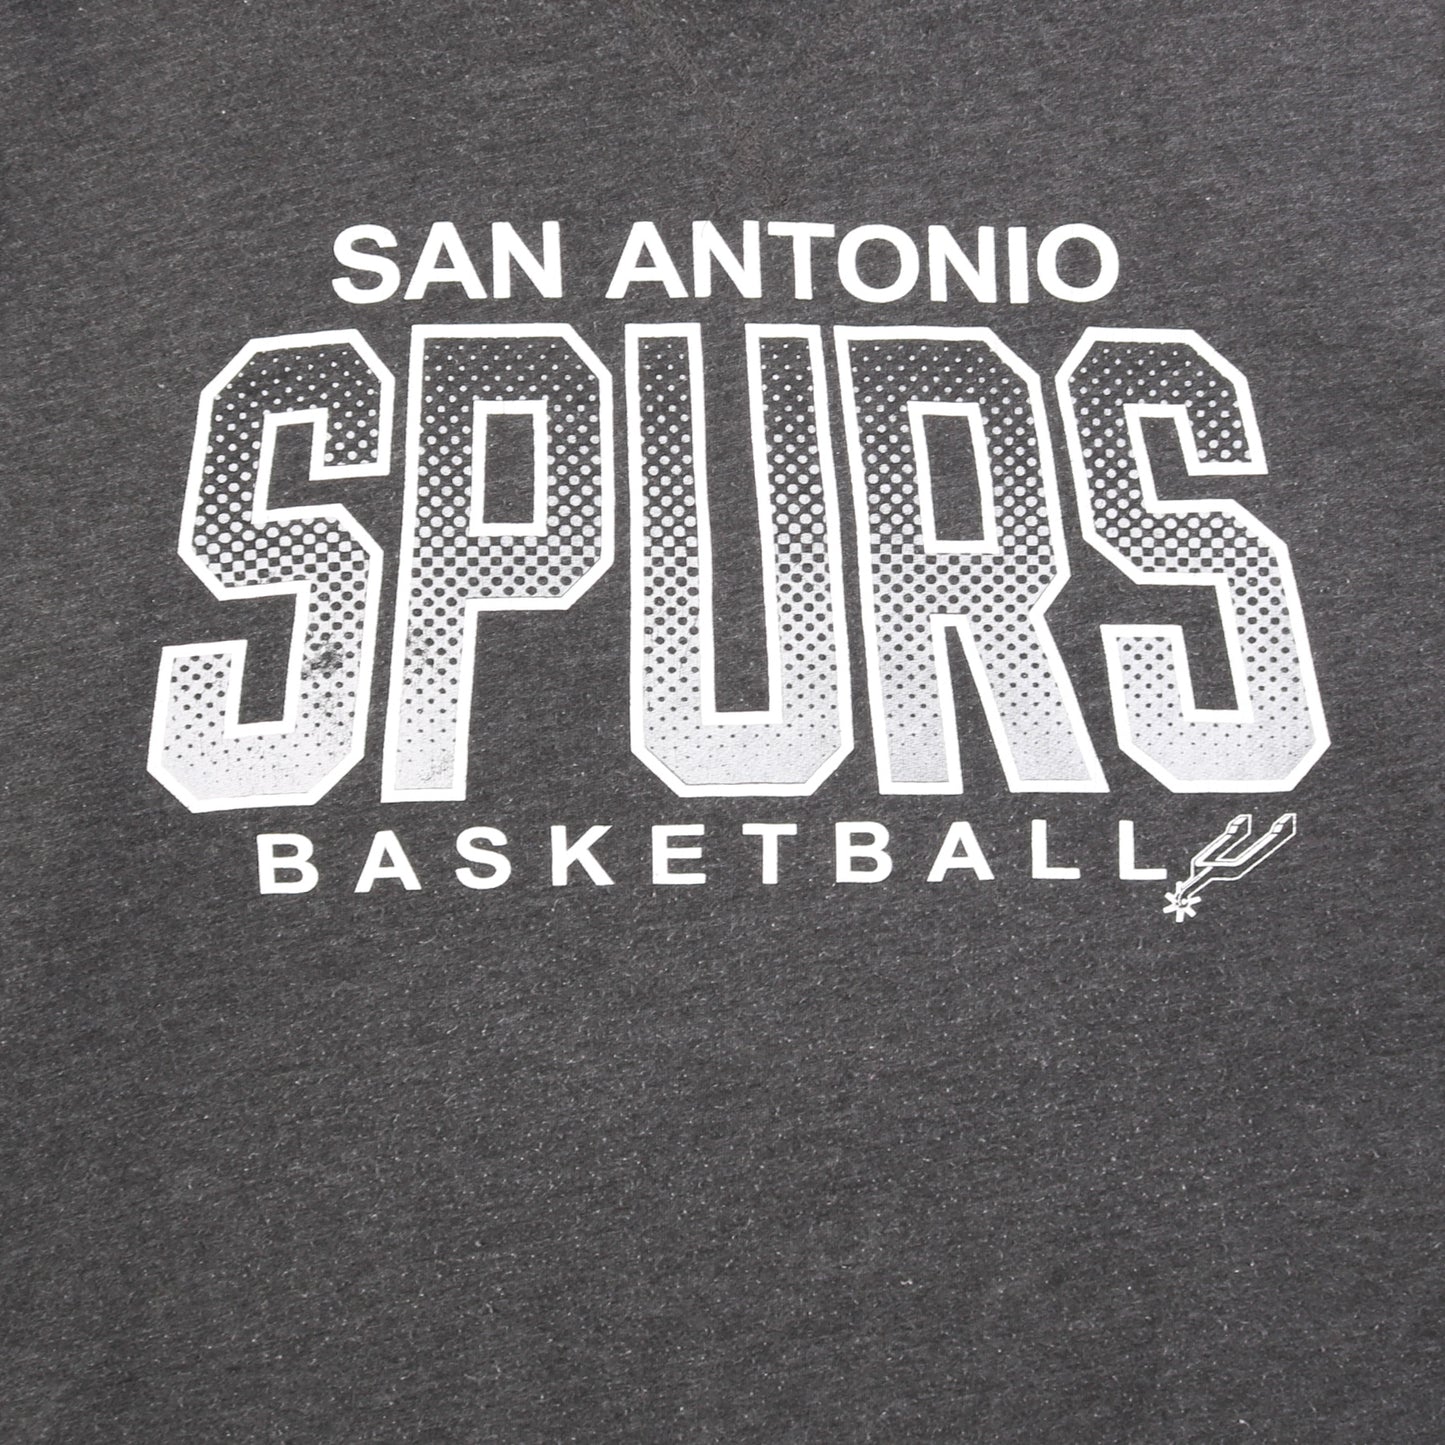 Vintage 'Spurs' Champion Sweatshirt - American Madness